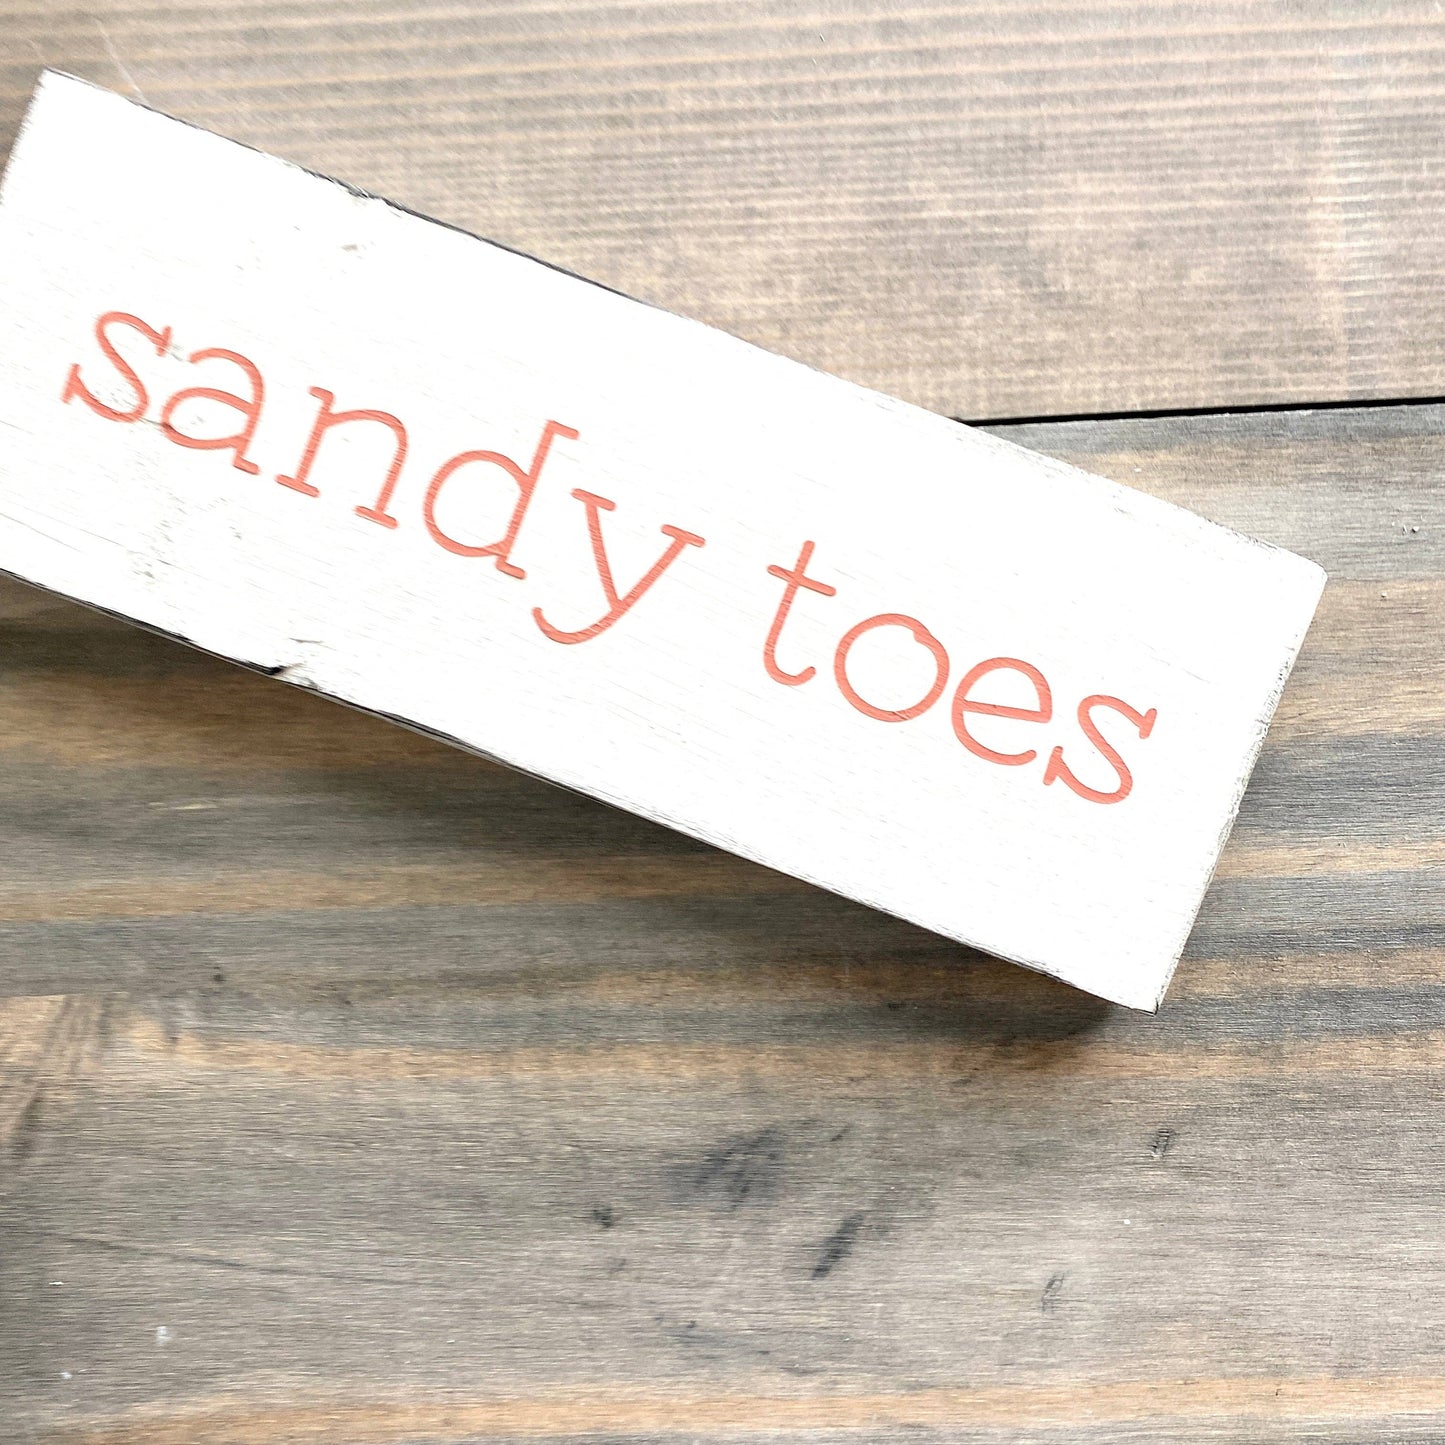 $25Anchored Soul Designs - Sandy Toes Sign, beach house nursery decor, coastal home: Orange